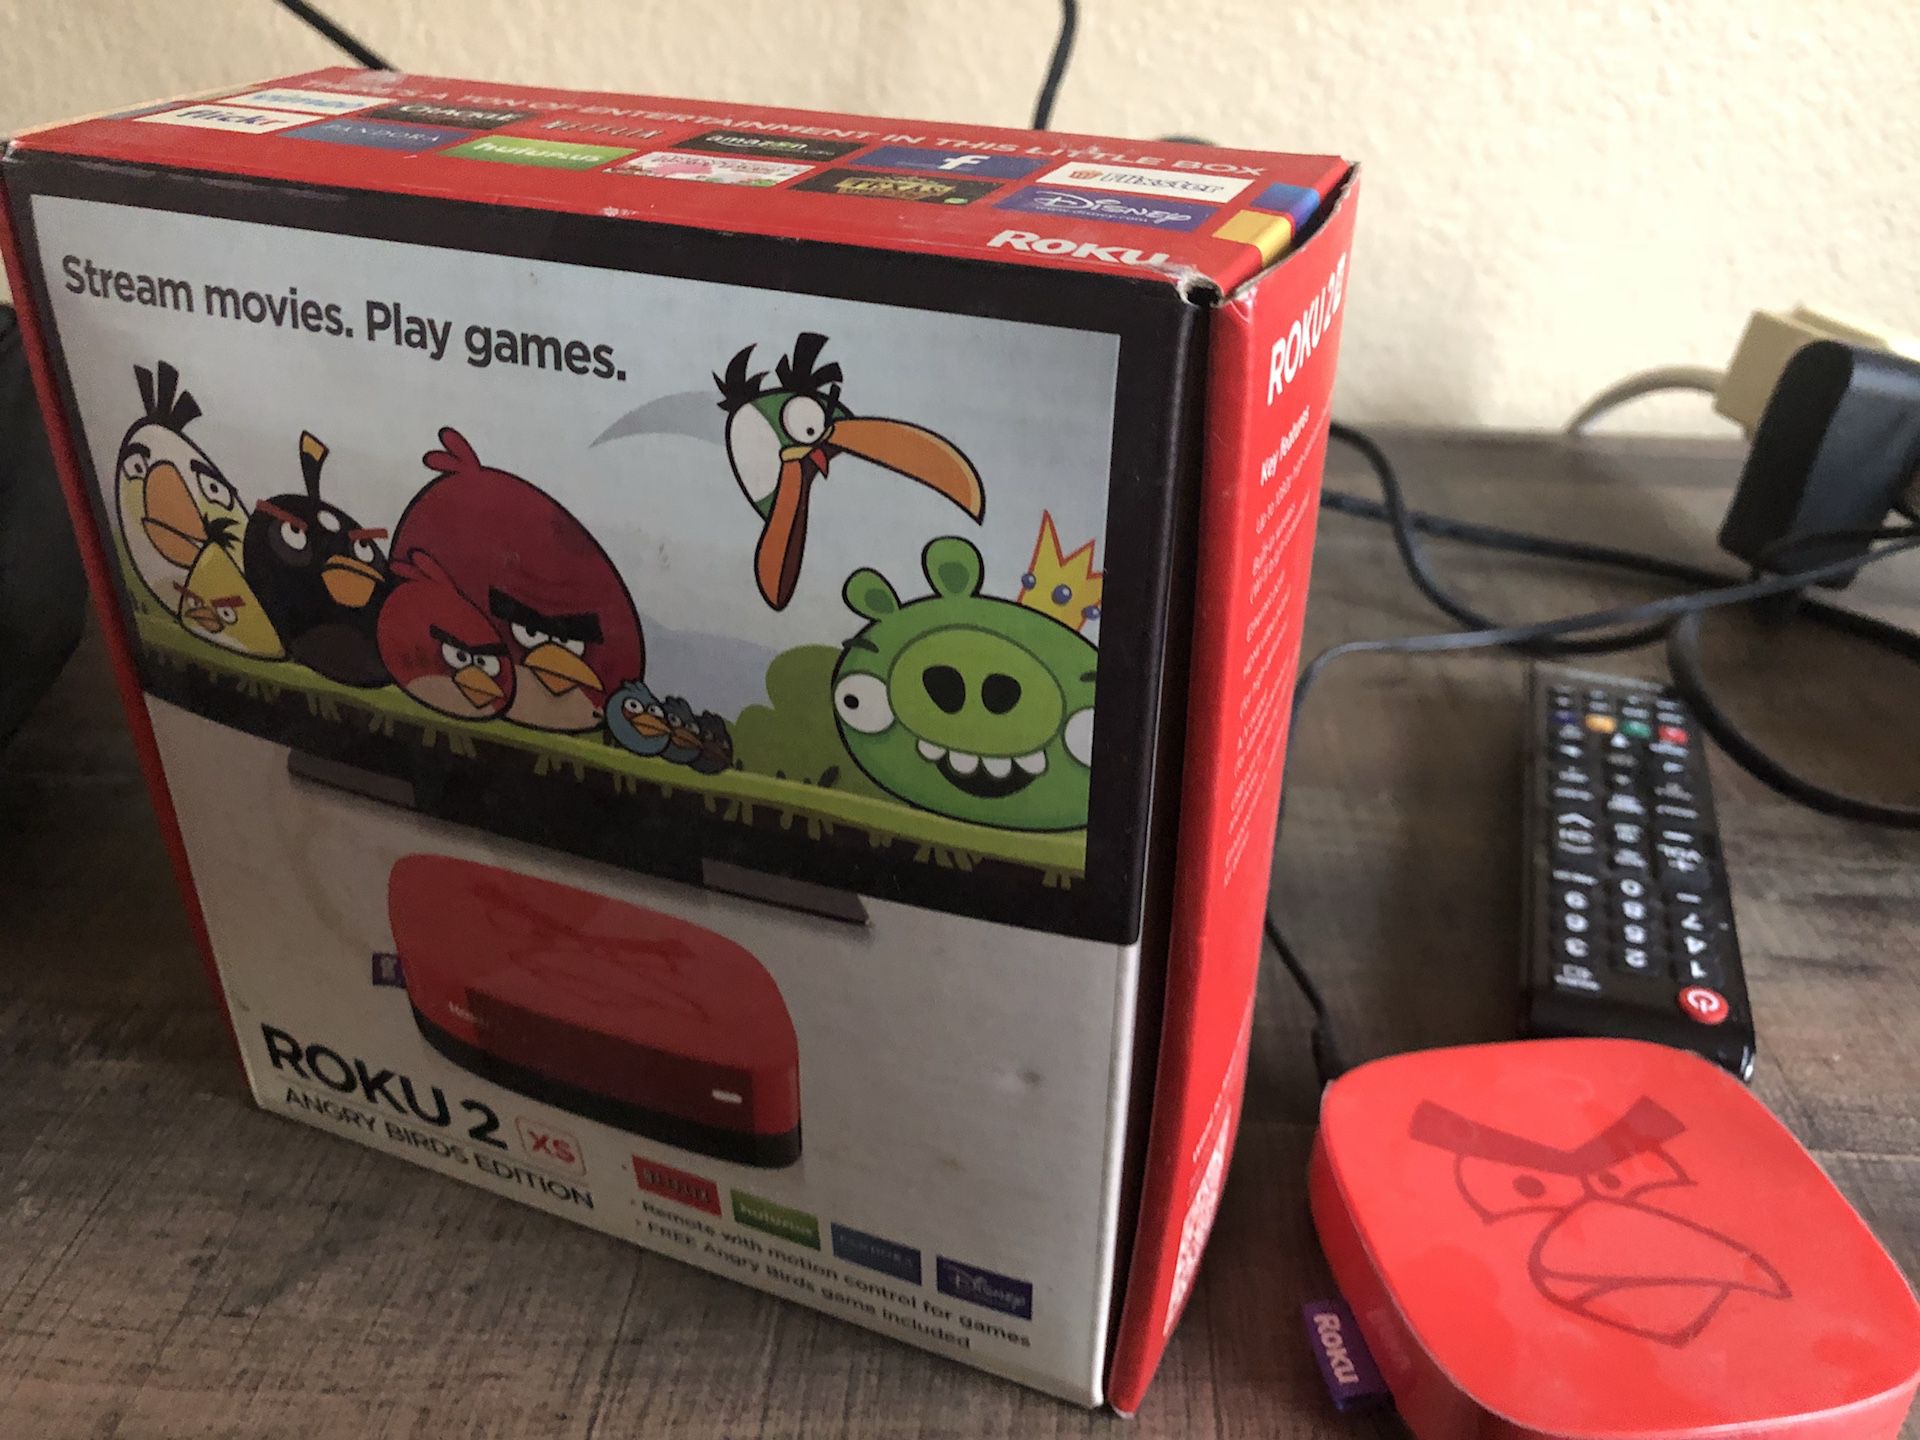 Roku 2 box with remote